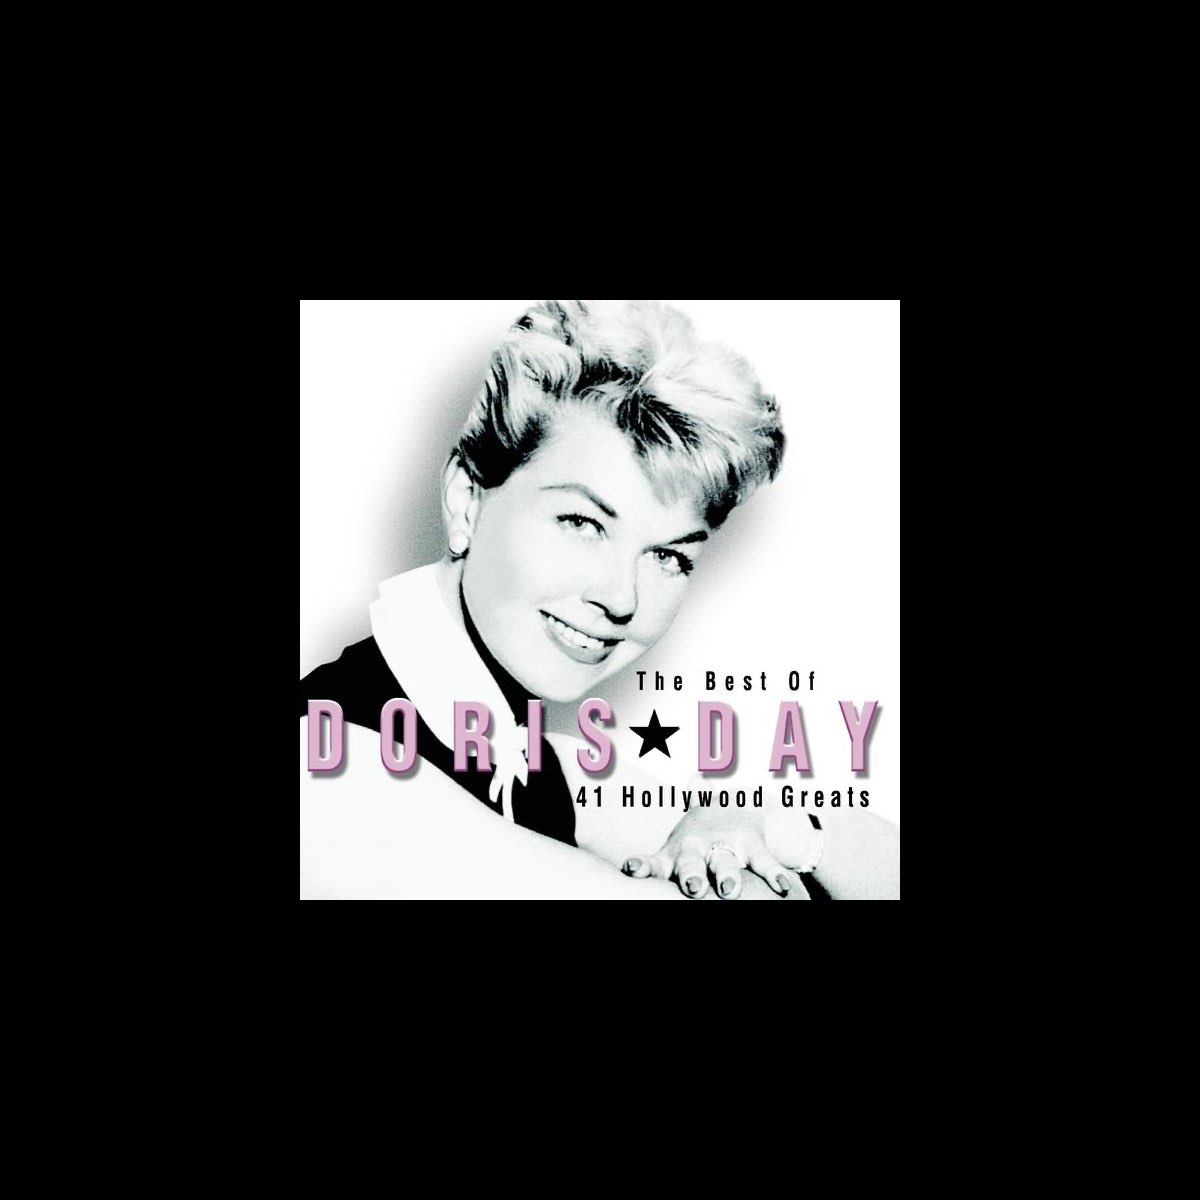 ‎Apple Music 上Doris Day的专辑《Doris Day - 41 Hollywood Greats》